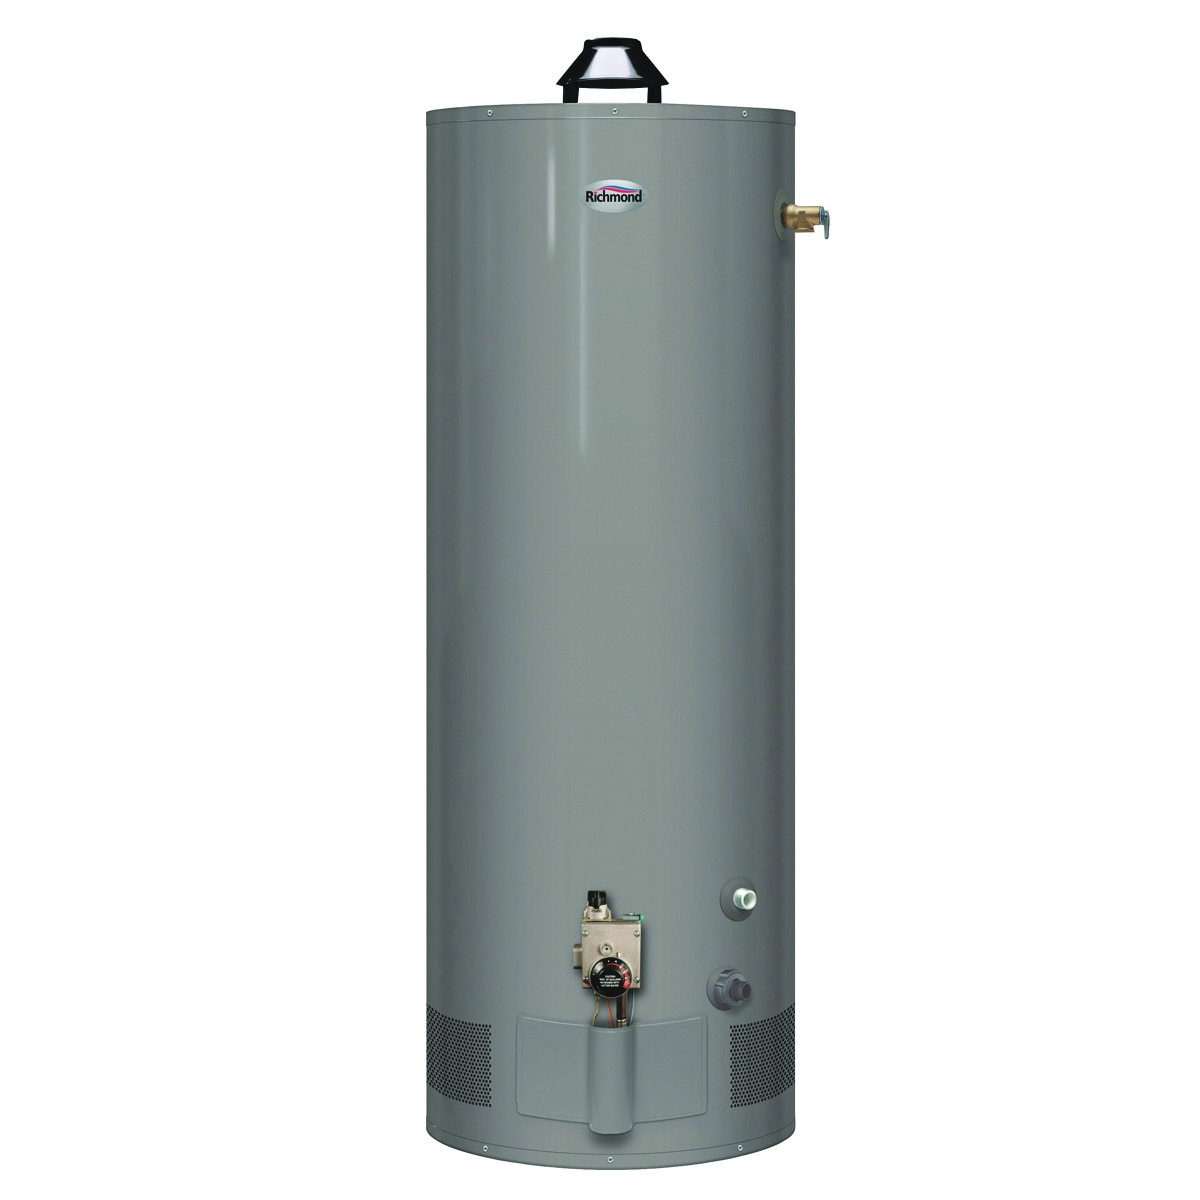 Essential Series 6V40FT3 Gas Water Heater, LP, Natural Gas, 40 gal Tank, 57 gph, 0.59 Energy Efficiency